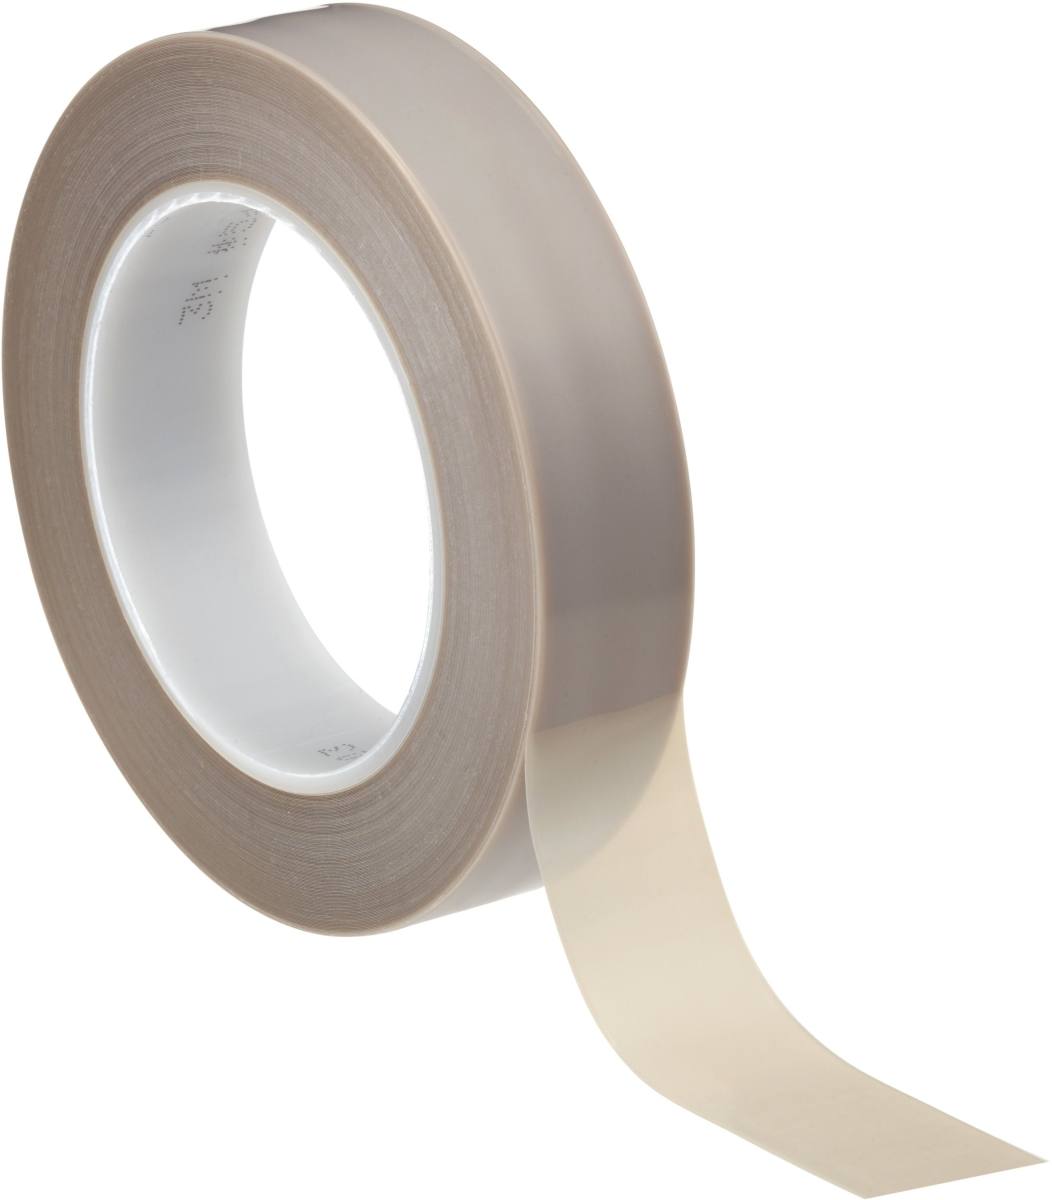 3M 5481 PTFE film adhesive tape 15mmx33m, 0.17mm, silicone